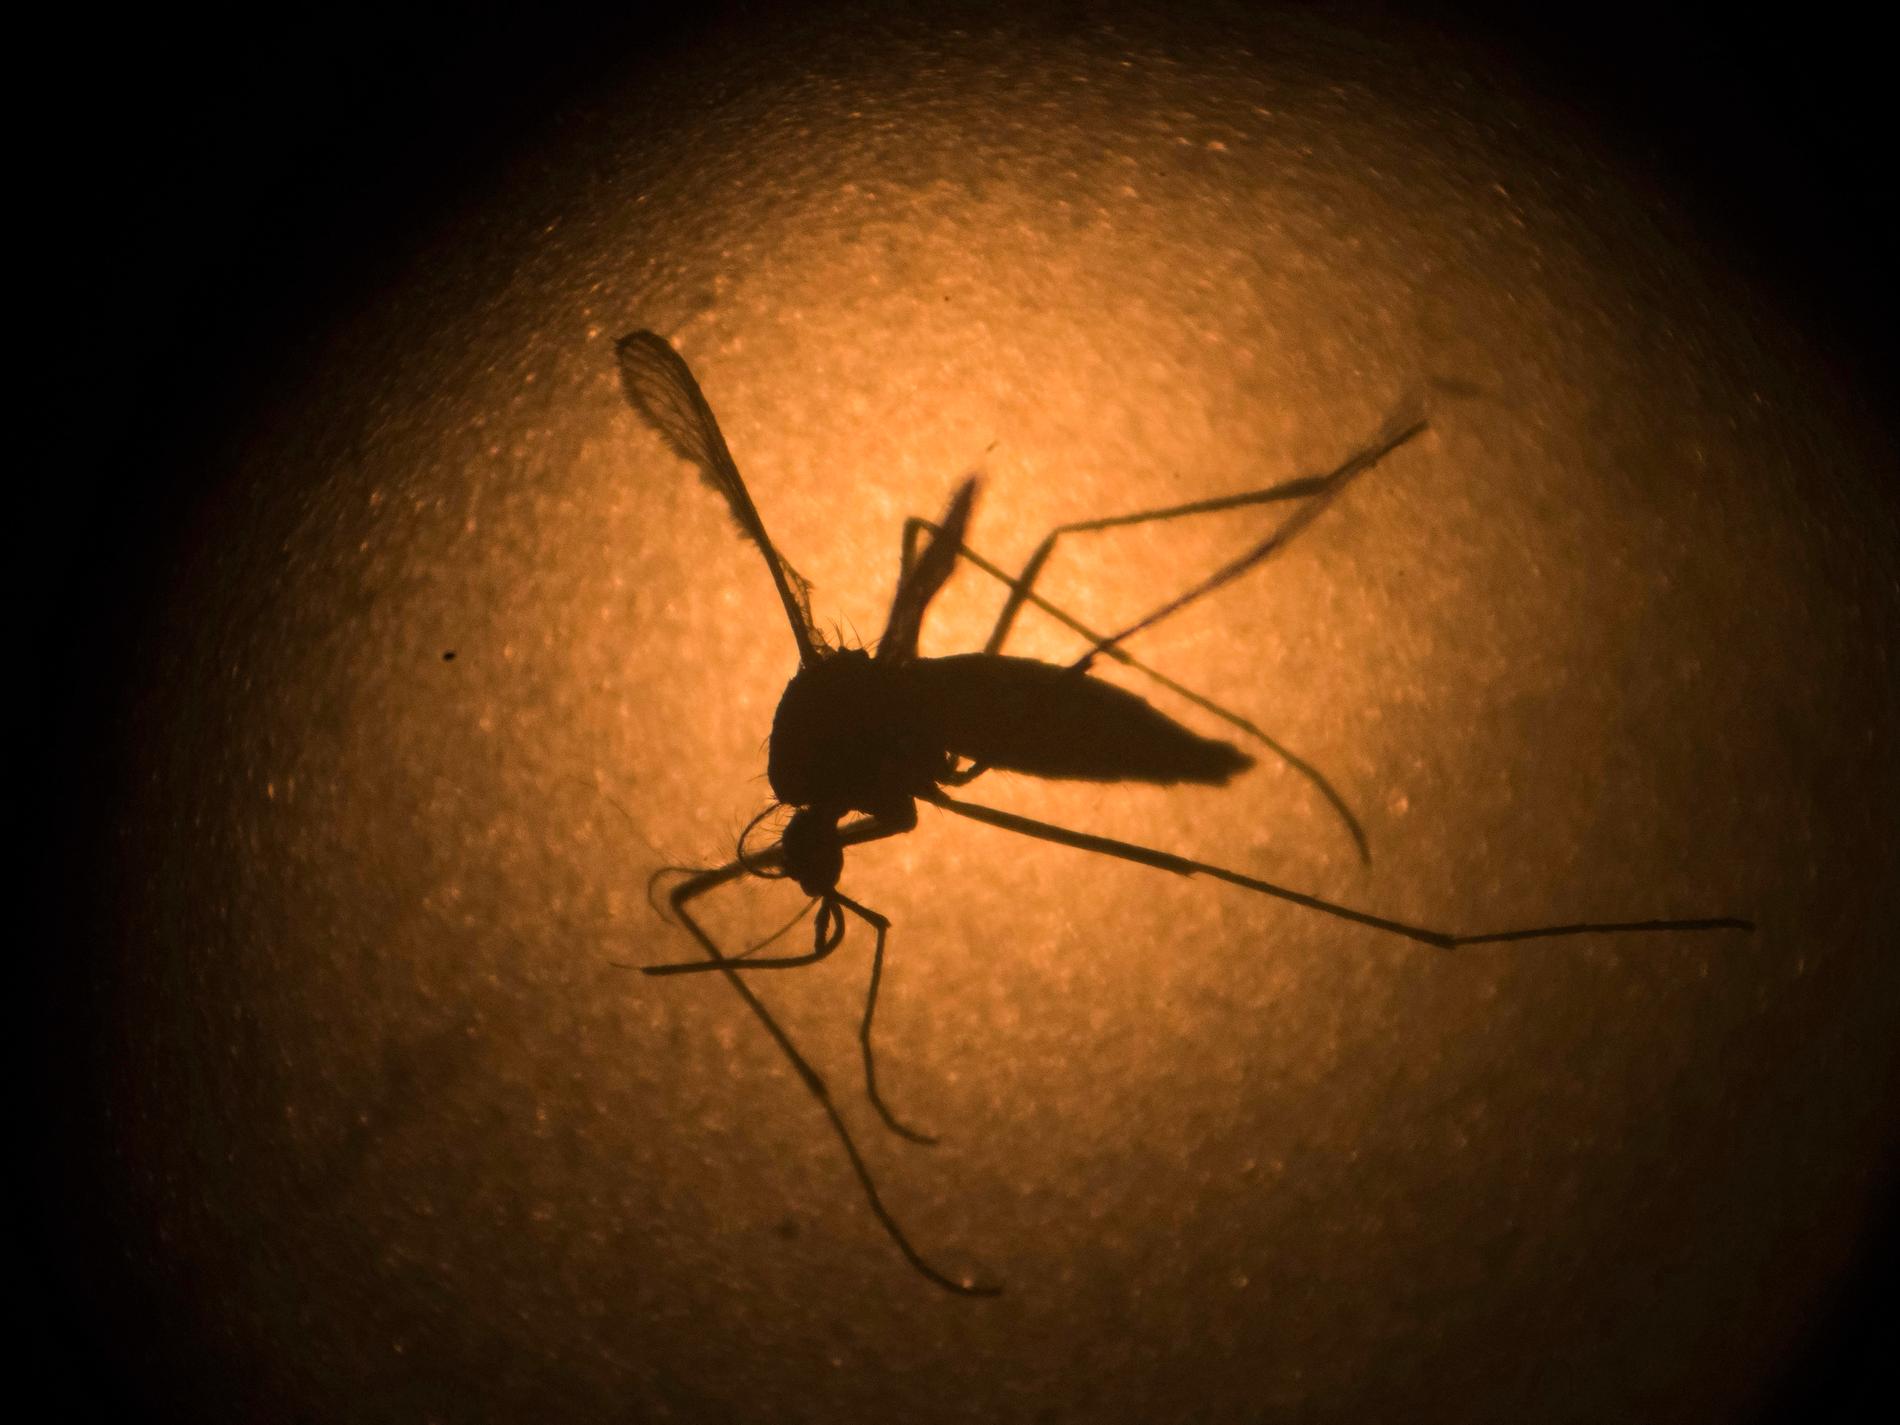 Myggor från labb ska lösa myggproblem i LA